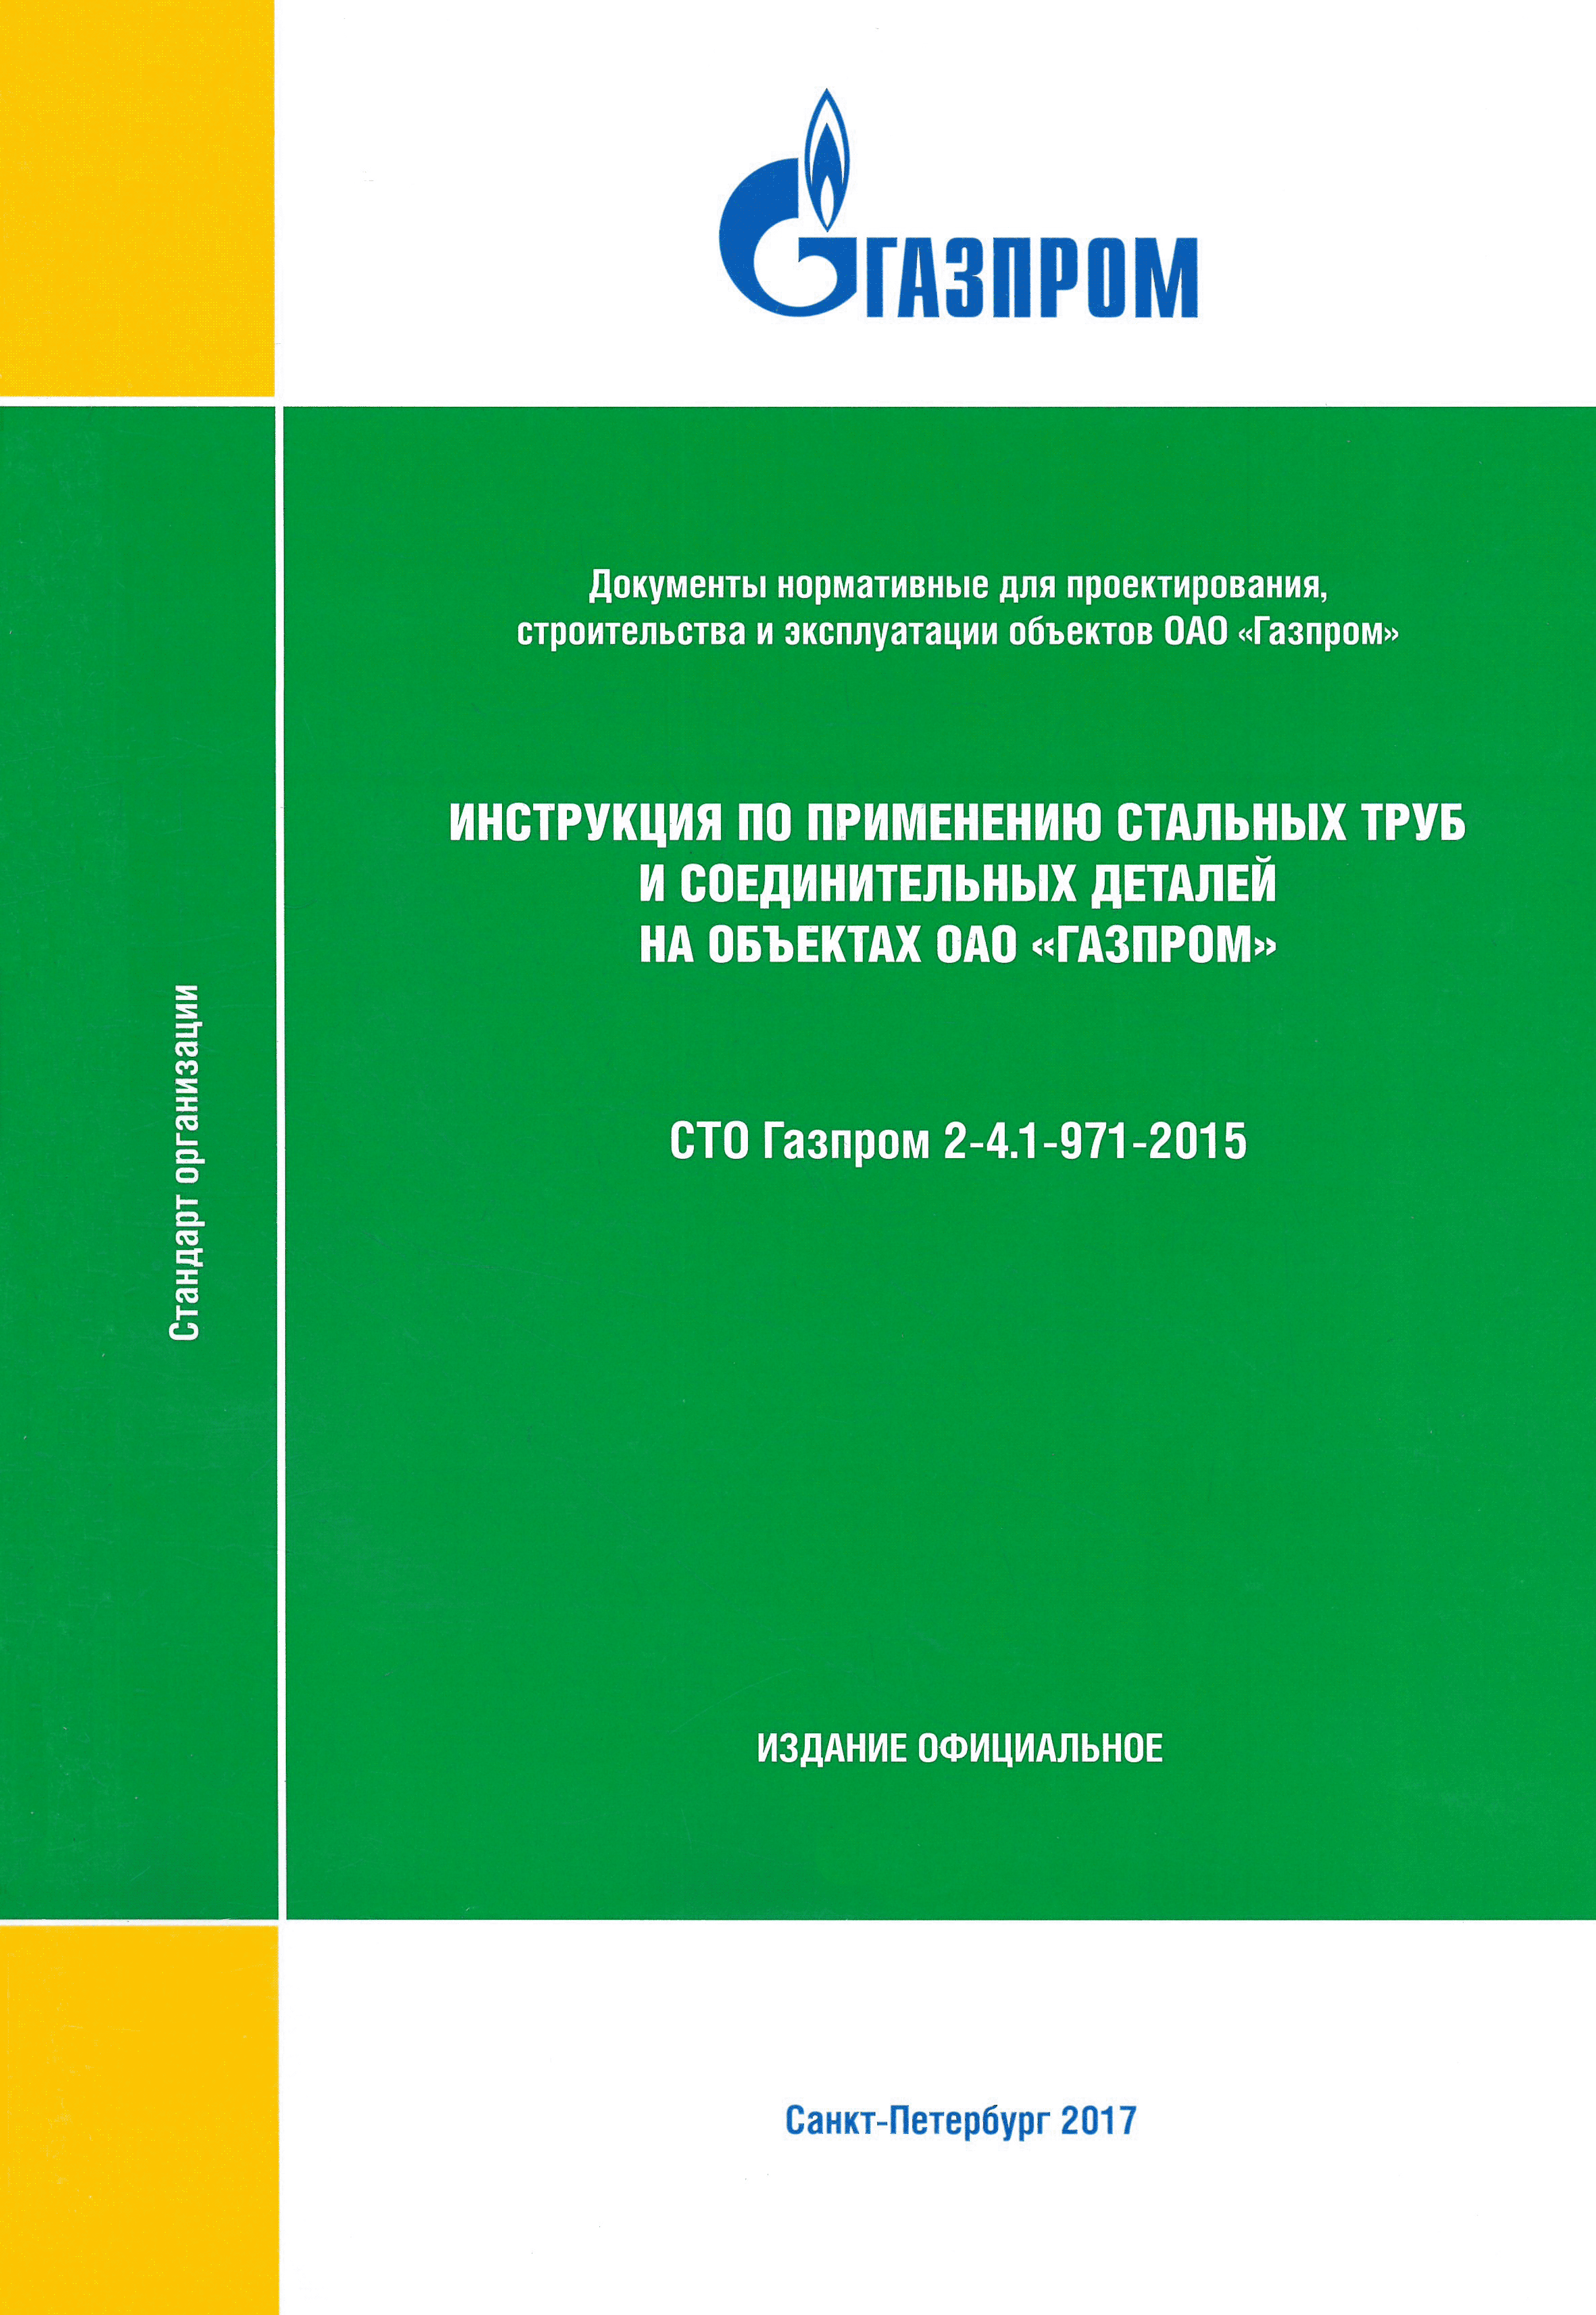 СТО Газпром 2-4.1-971-2015